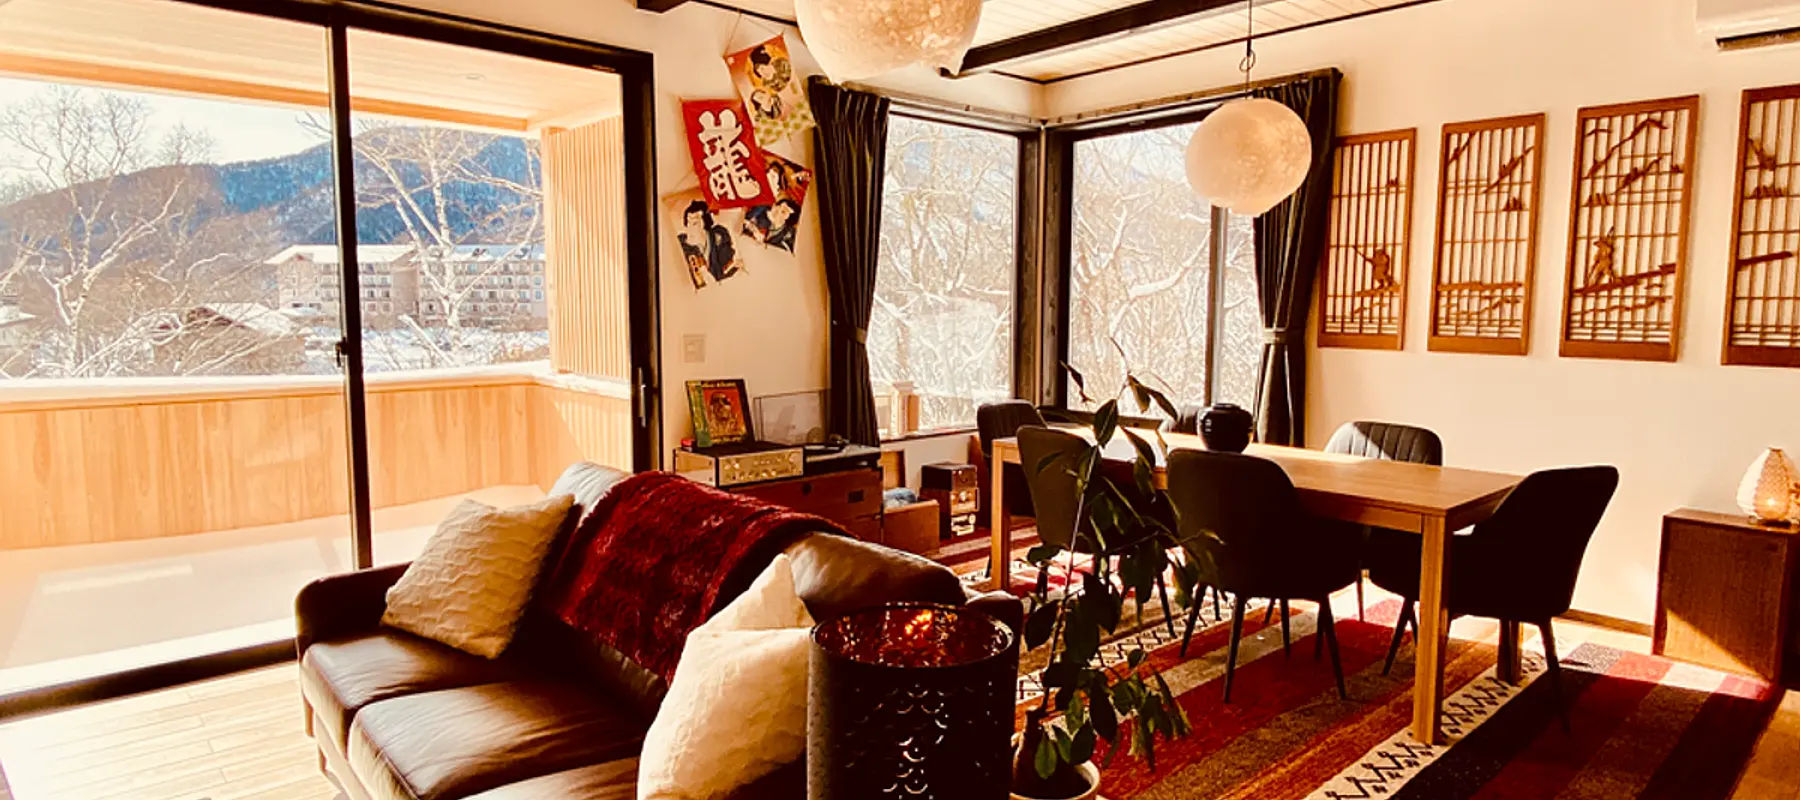 Snowman Tani Lounge And Dining Towards Windows Warm Small